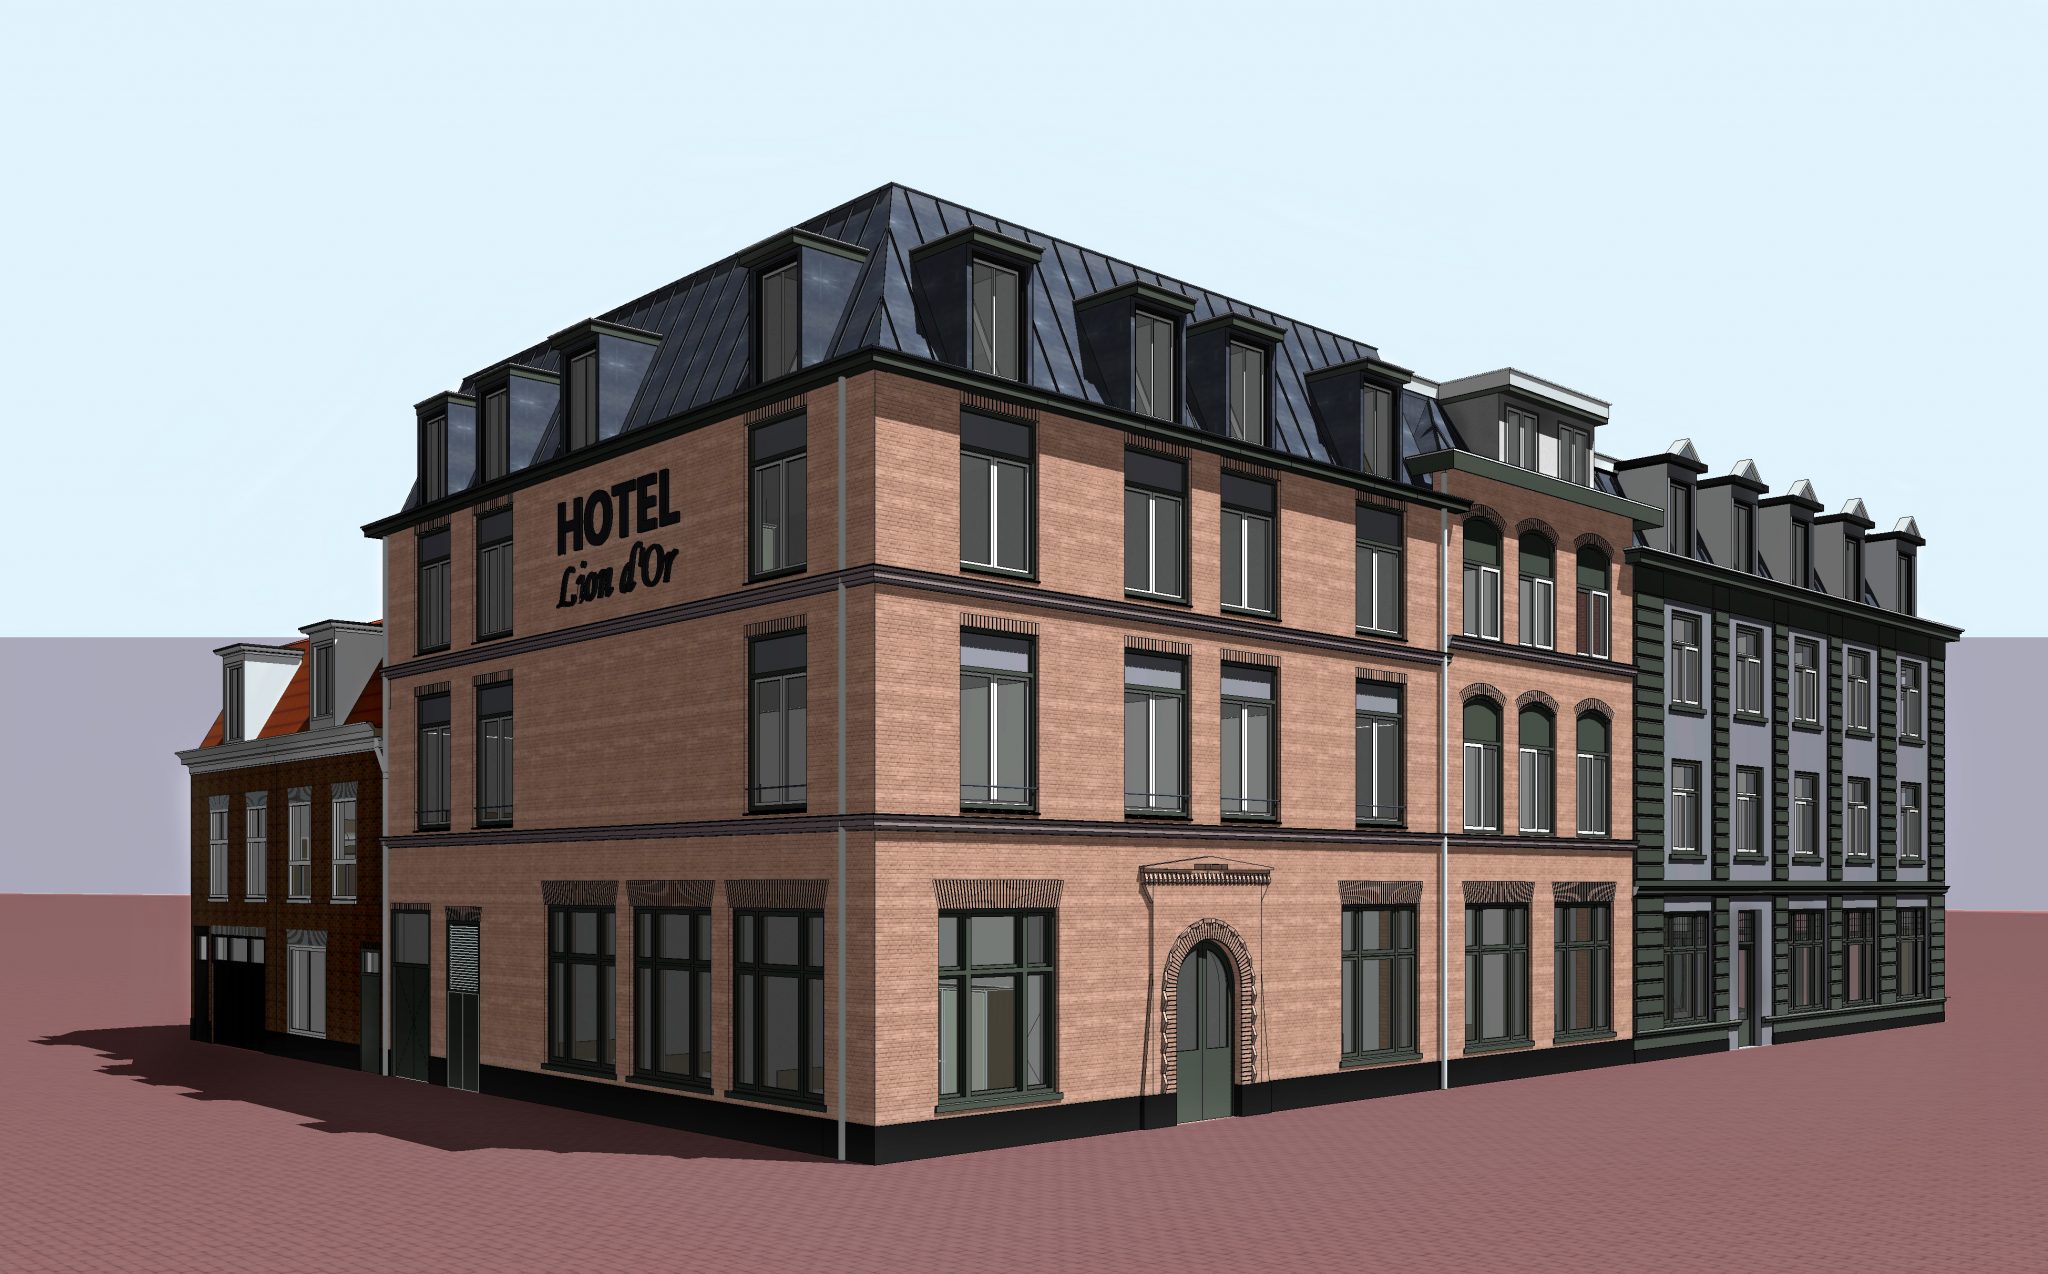 Hotel Lion d'or ligt aan de Kruisweg / Stationsplein in Haarlem. Het hotel is intern verbouwd en uitgebreid